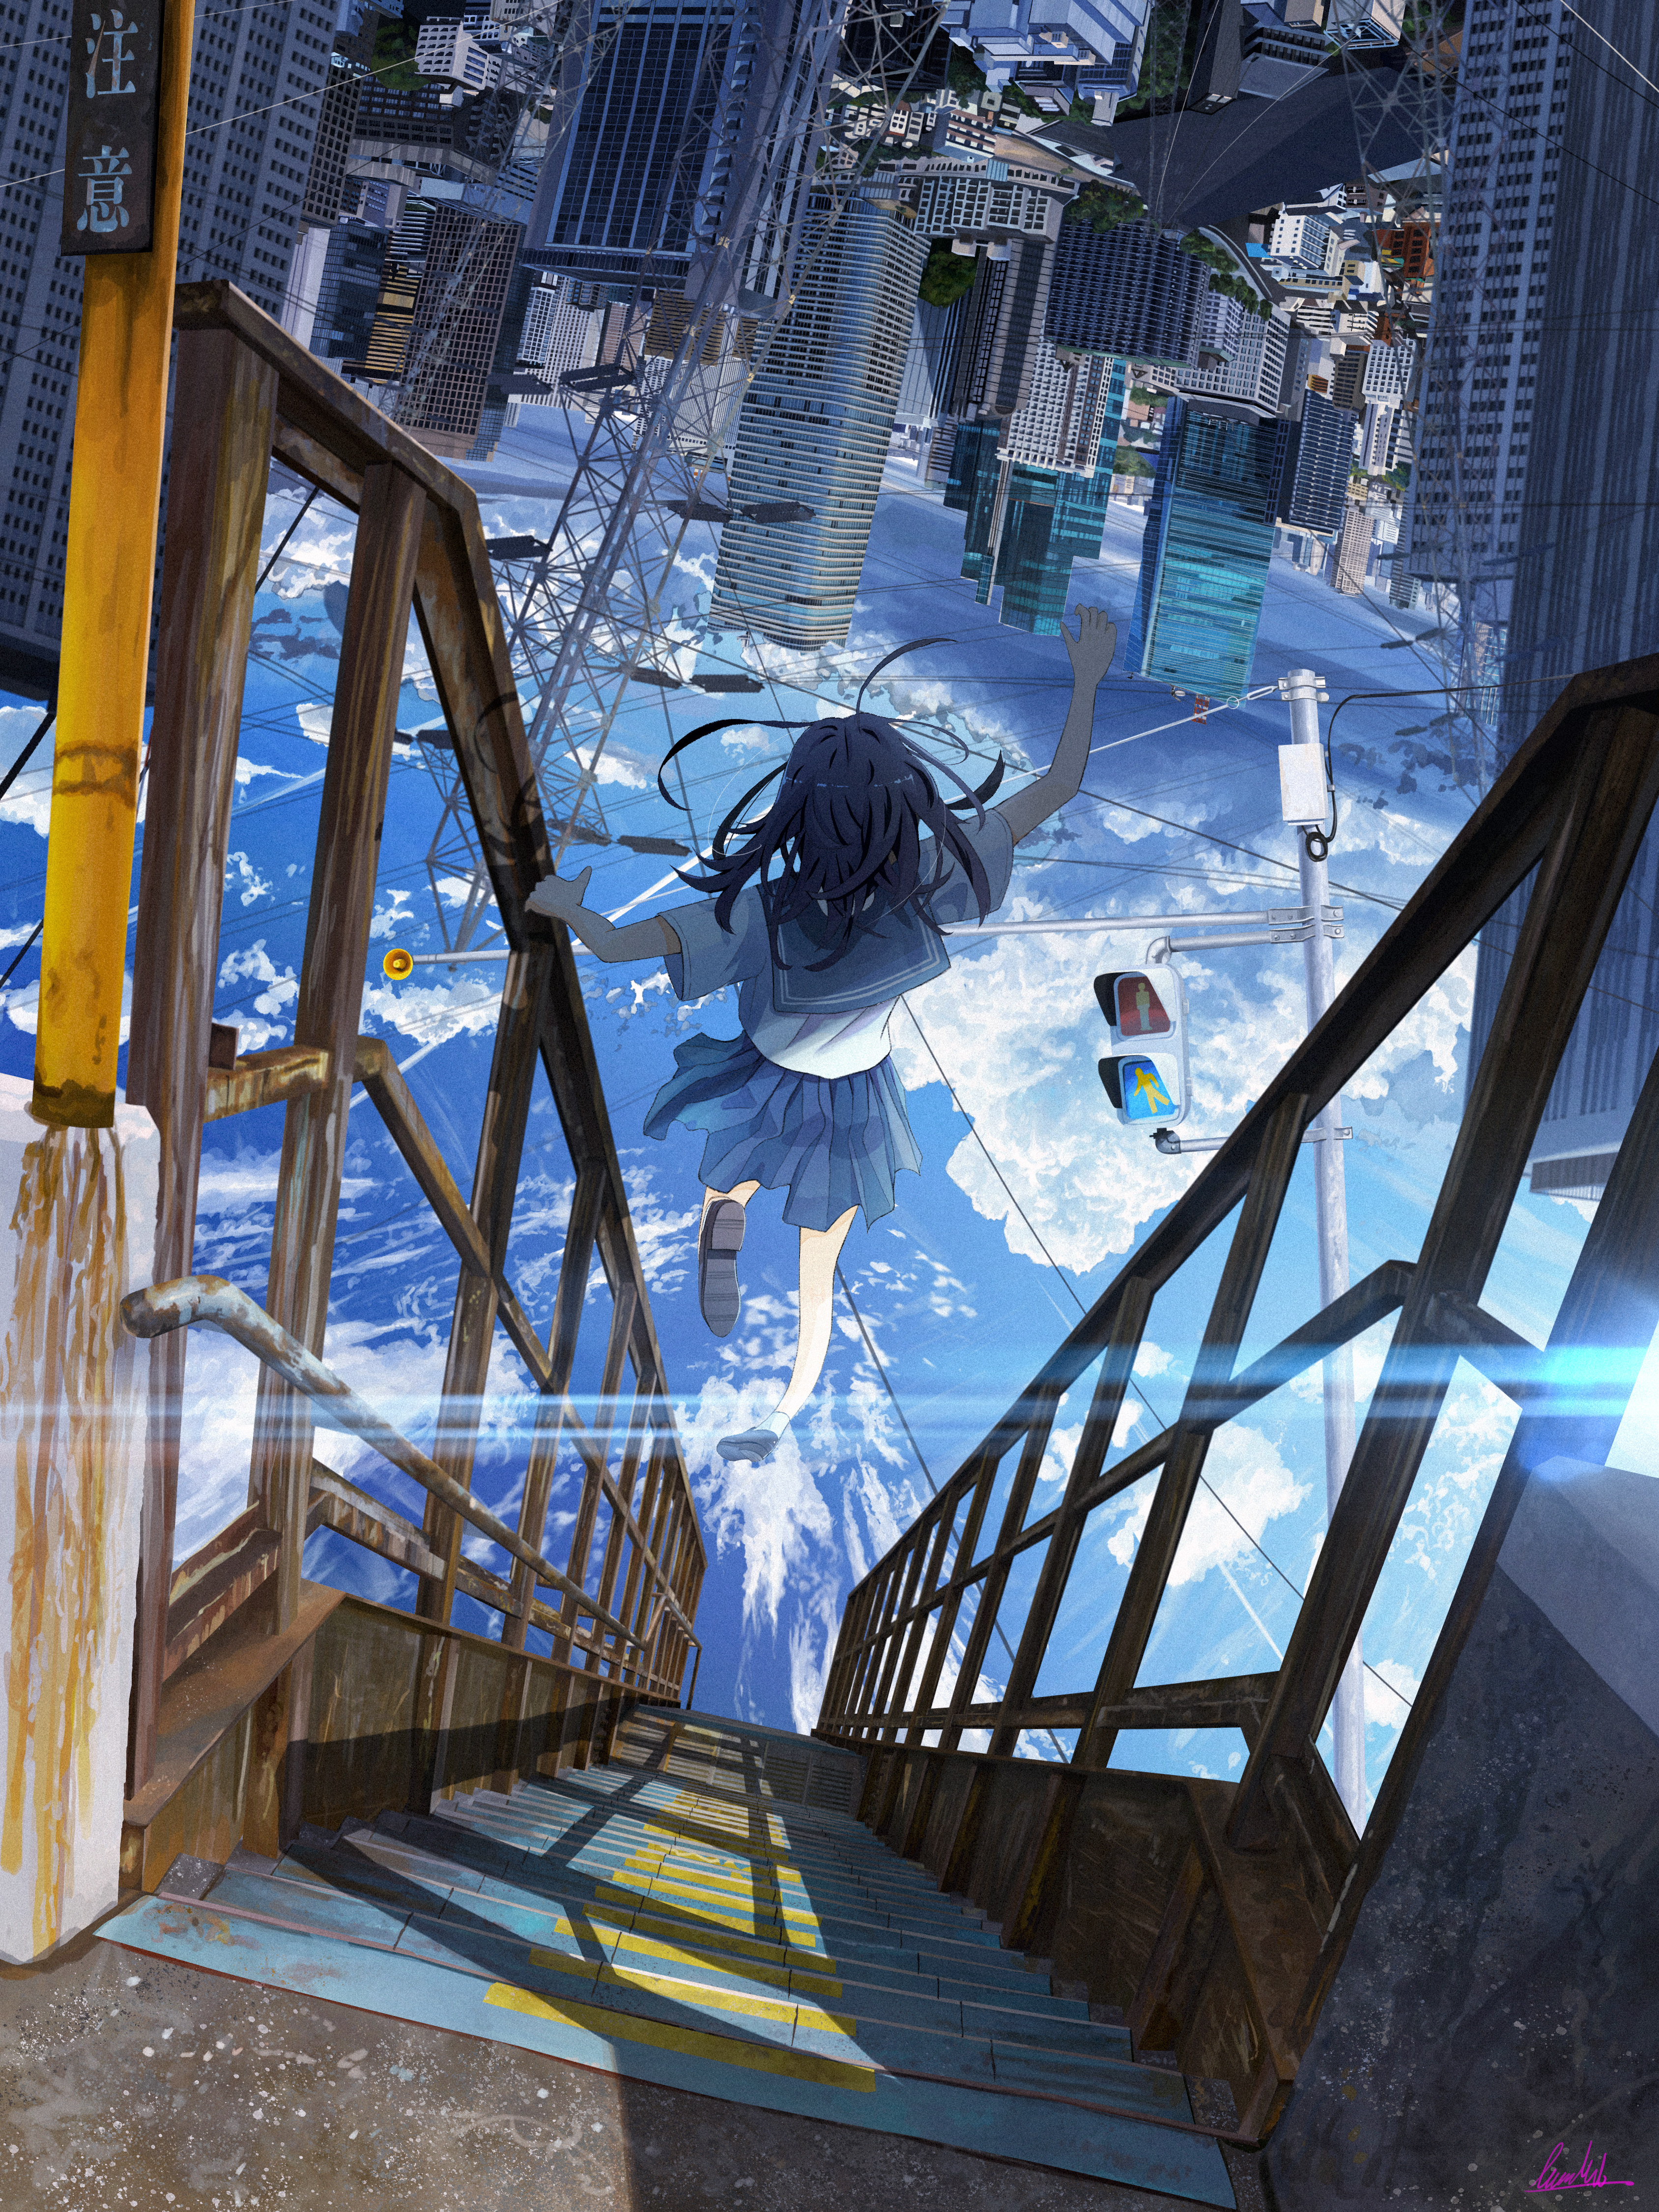 Anime 3376x4501 digital art anime anime girls abstract city cityscape ladder sky clouds school uniform schoolgirl upside down